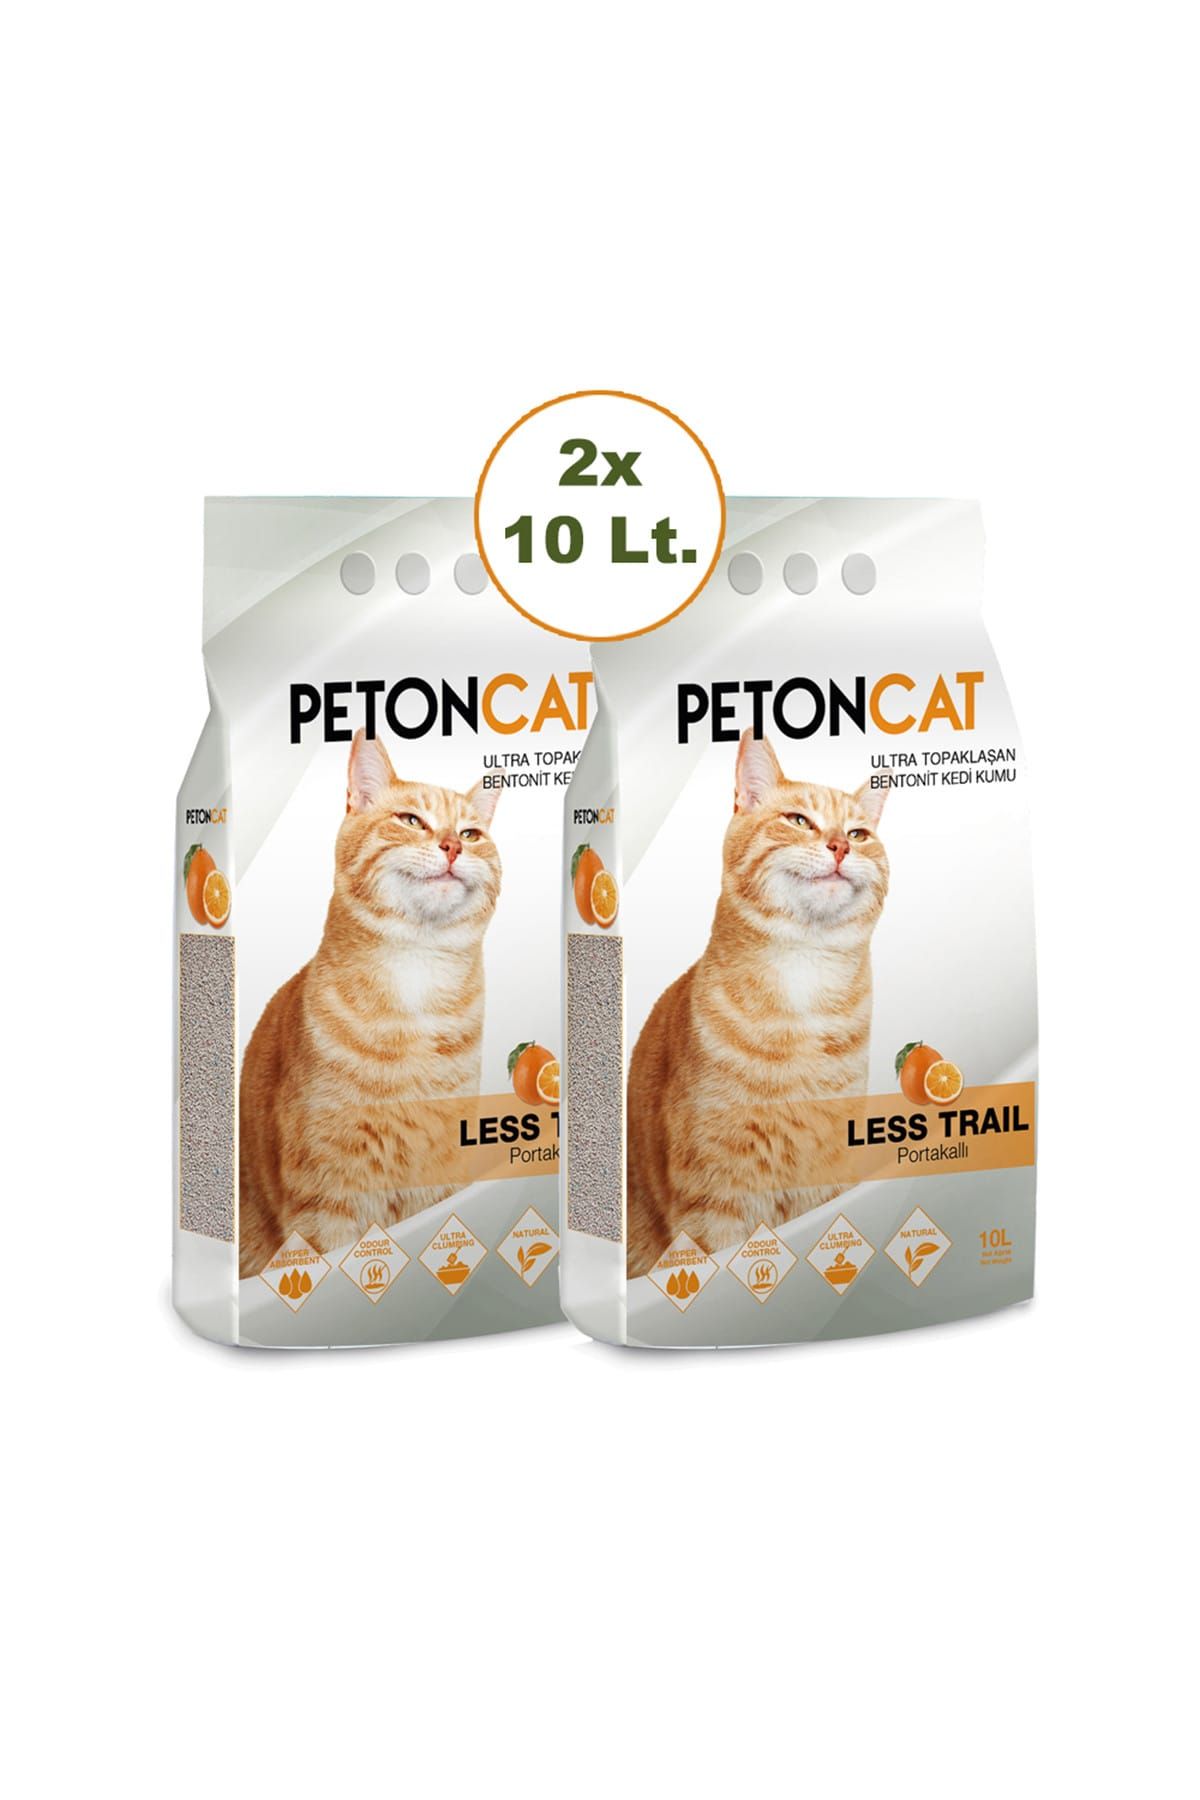 Peton Cat Portakallı İnce Taneli Topaklaşan Kedi Kumu 2 x 10 Lt